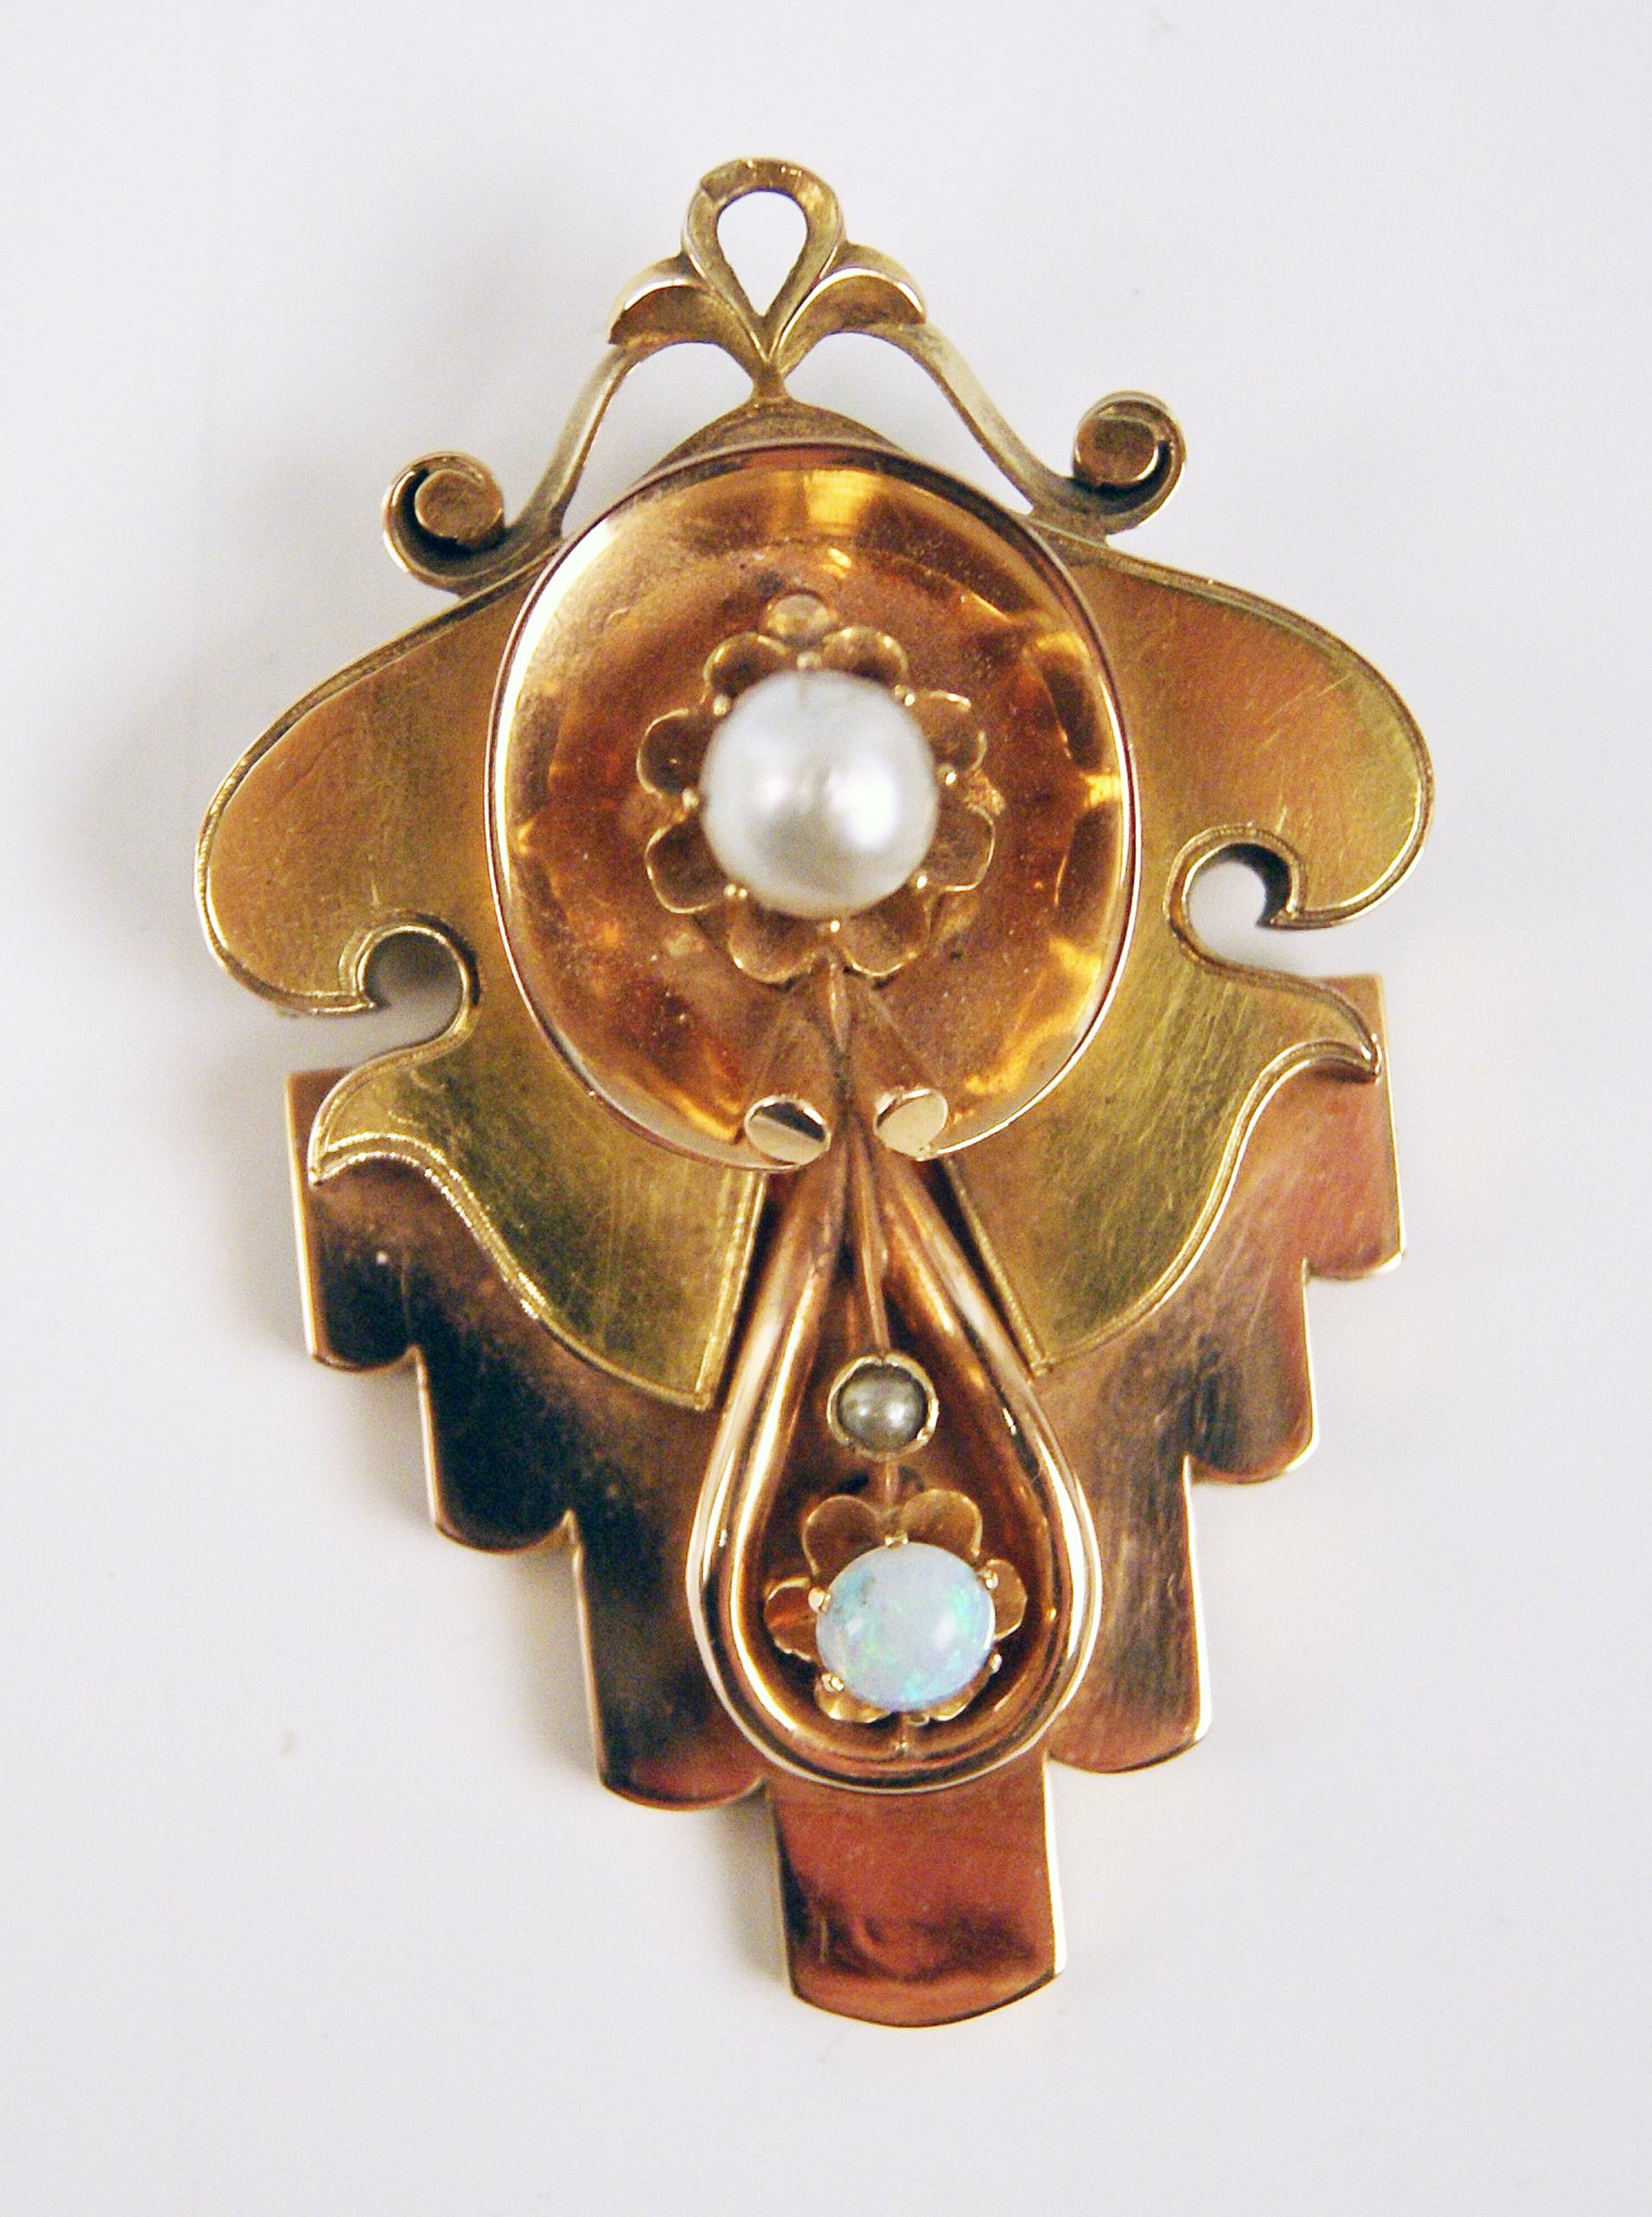 High Victorian Pendant Brooch Gold 585 Two Pearls One Opal Biedermeier Period Vienna circa 1850 For Sale